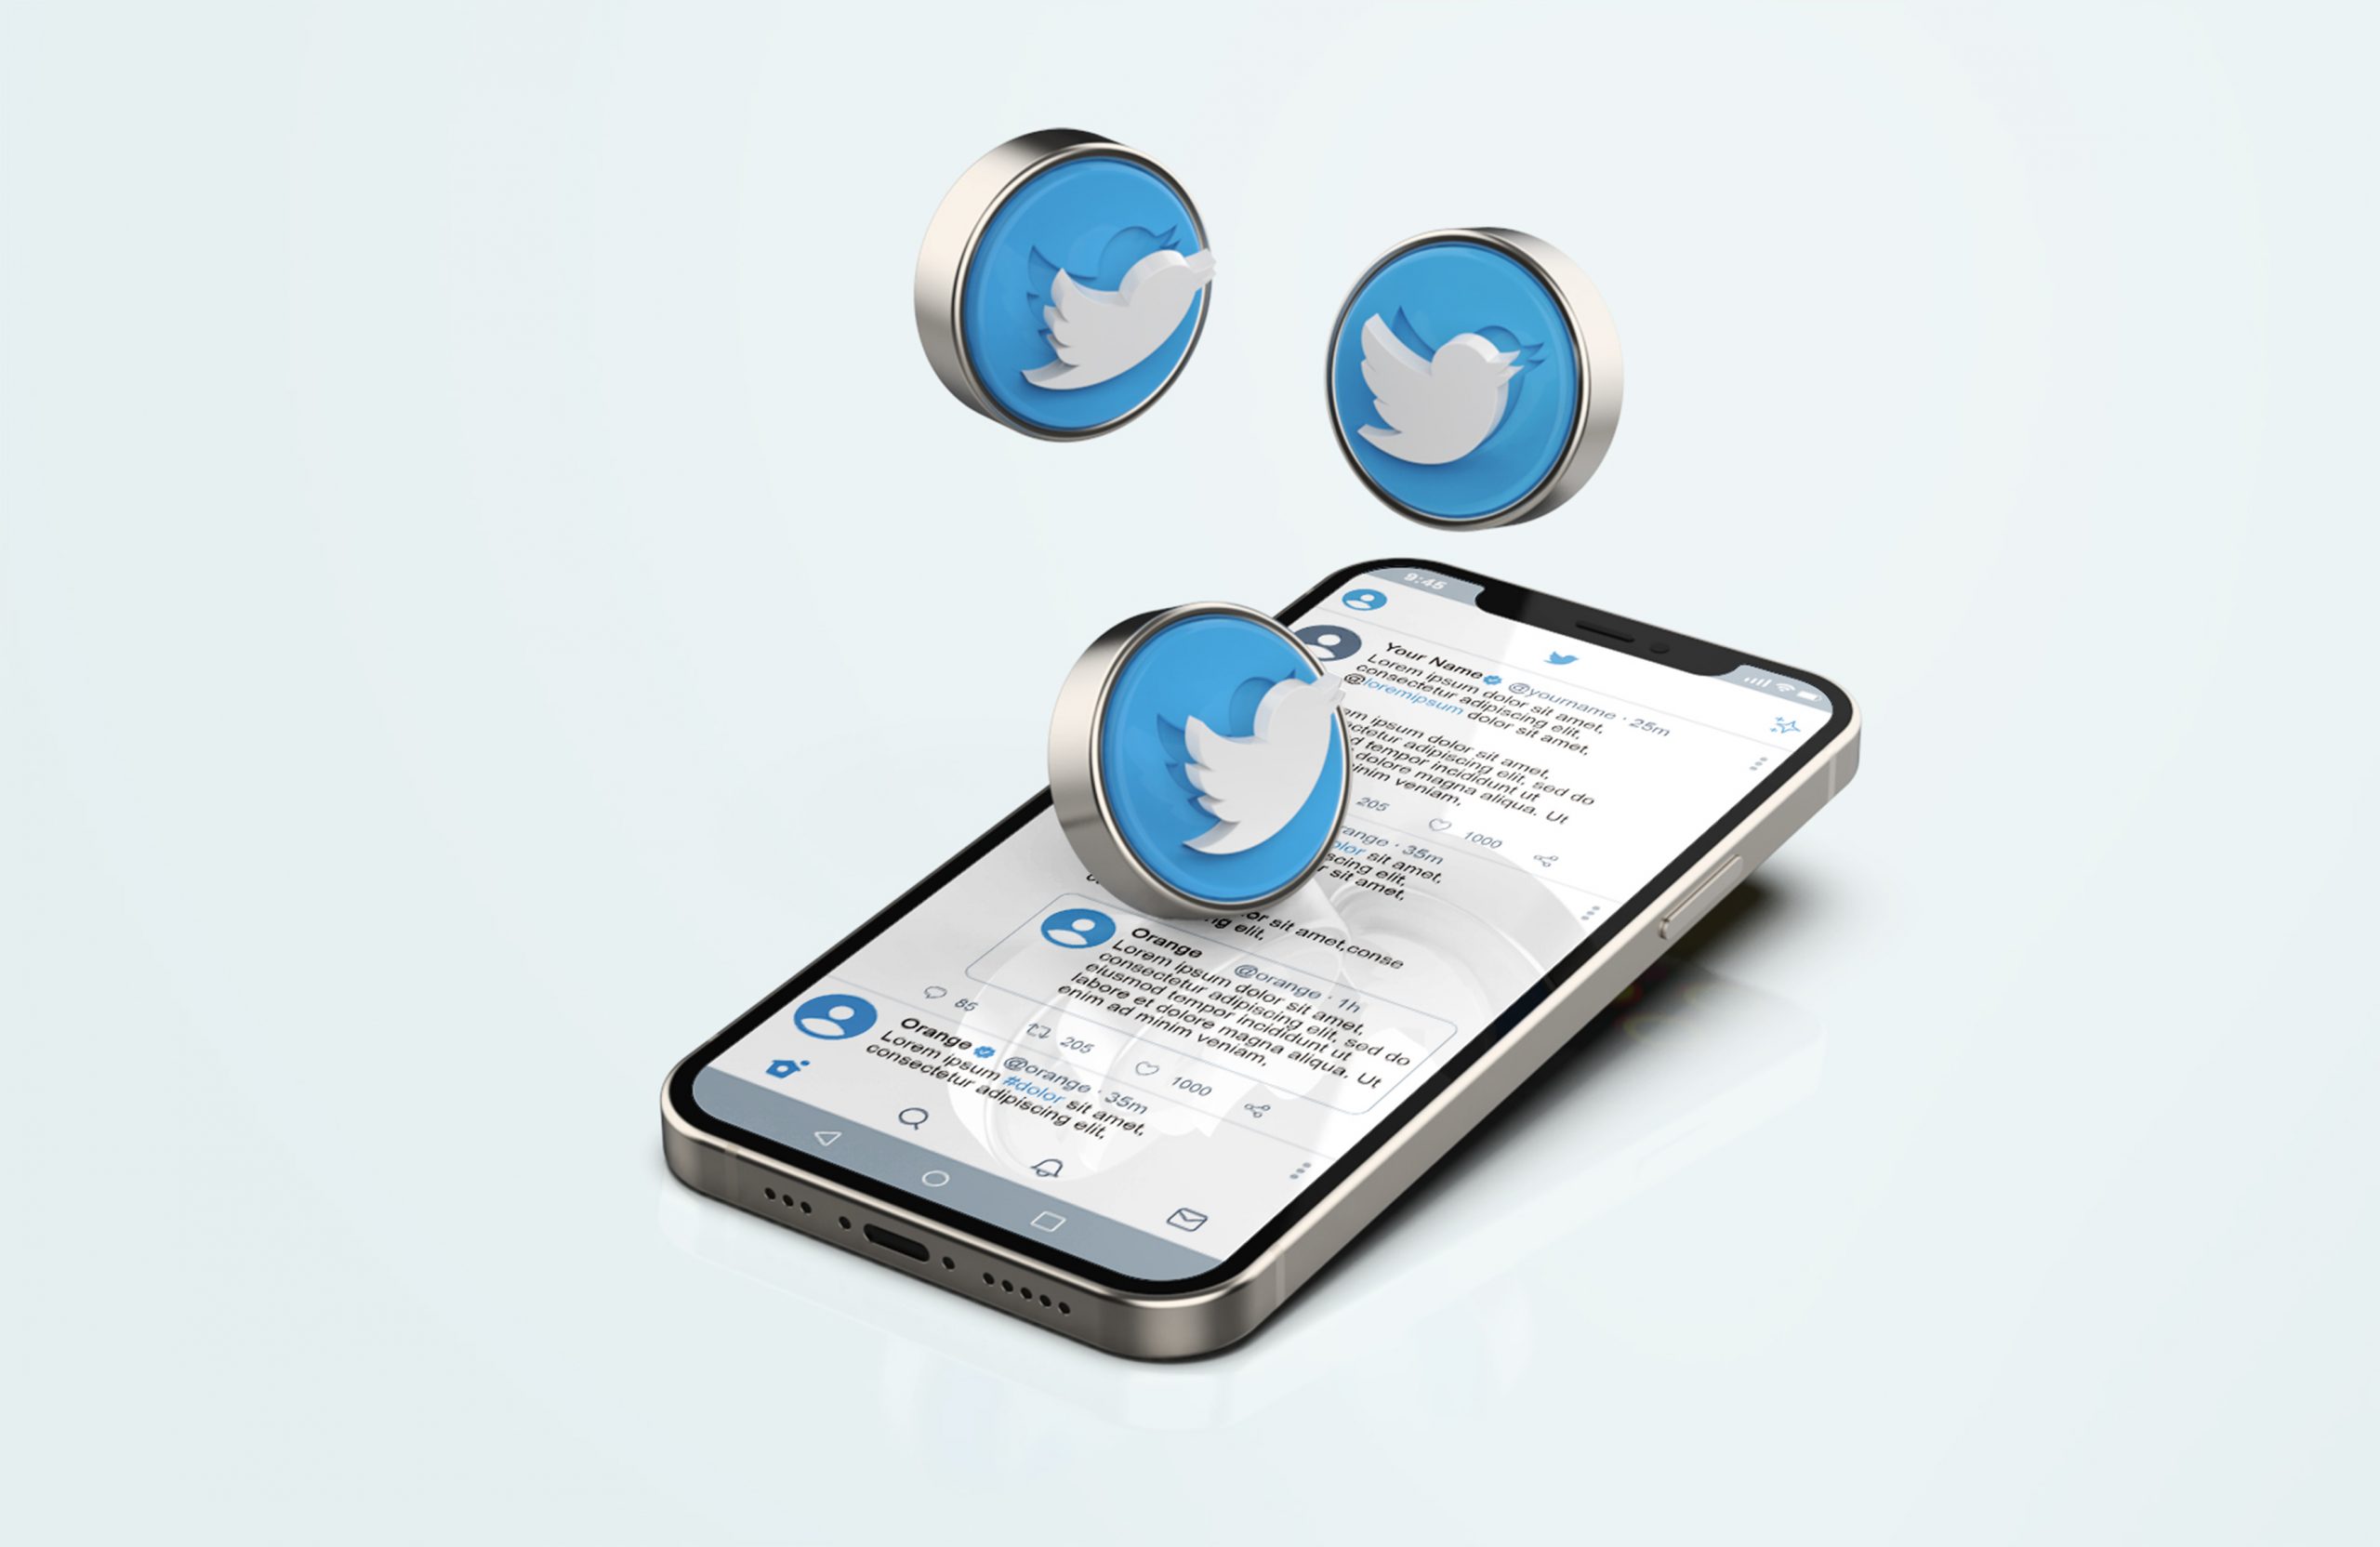 Cara Mengetahui Sender Di Base Twitter. Mengenal Apa itu Base Twitter, Cara Kerja dan Fungsinya!